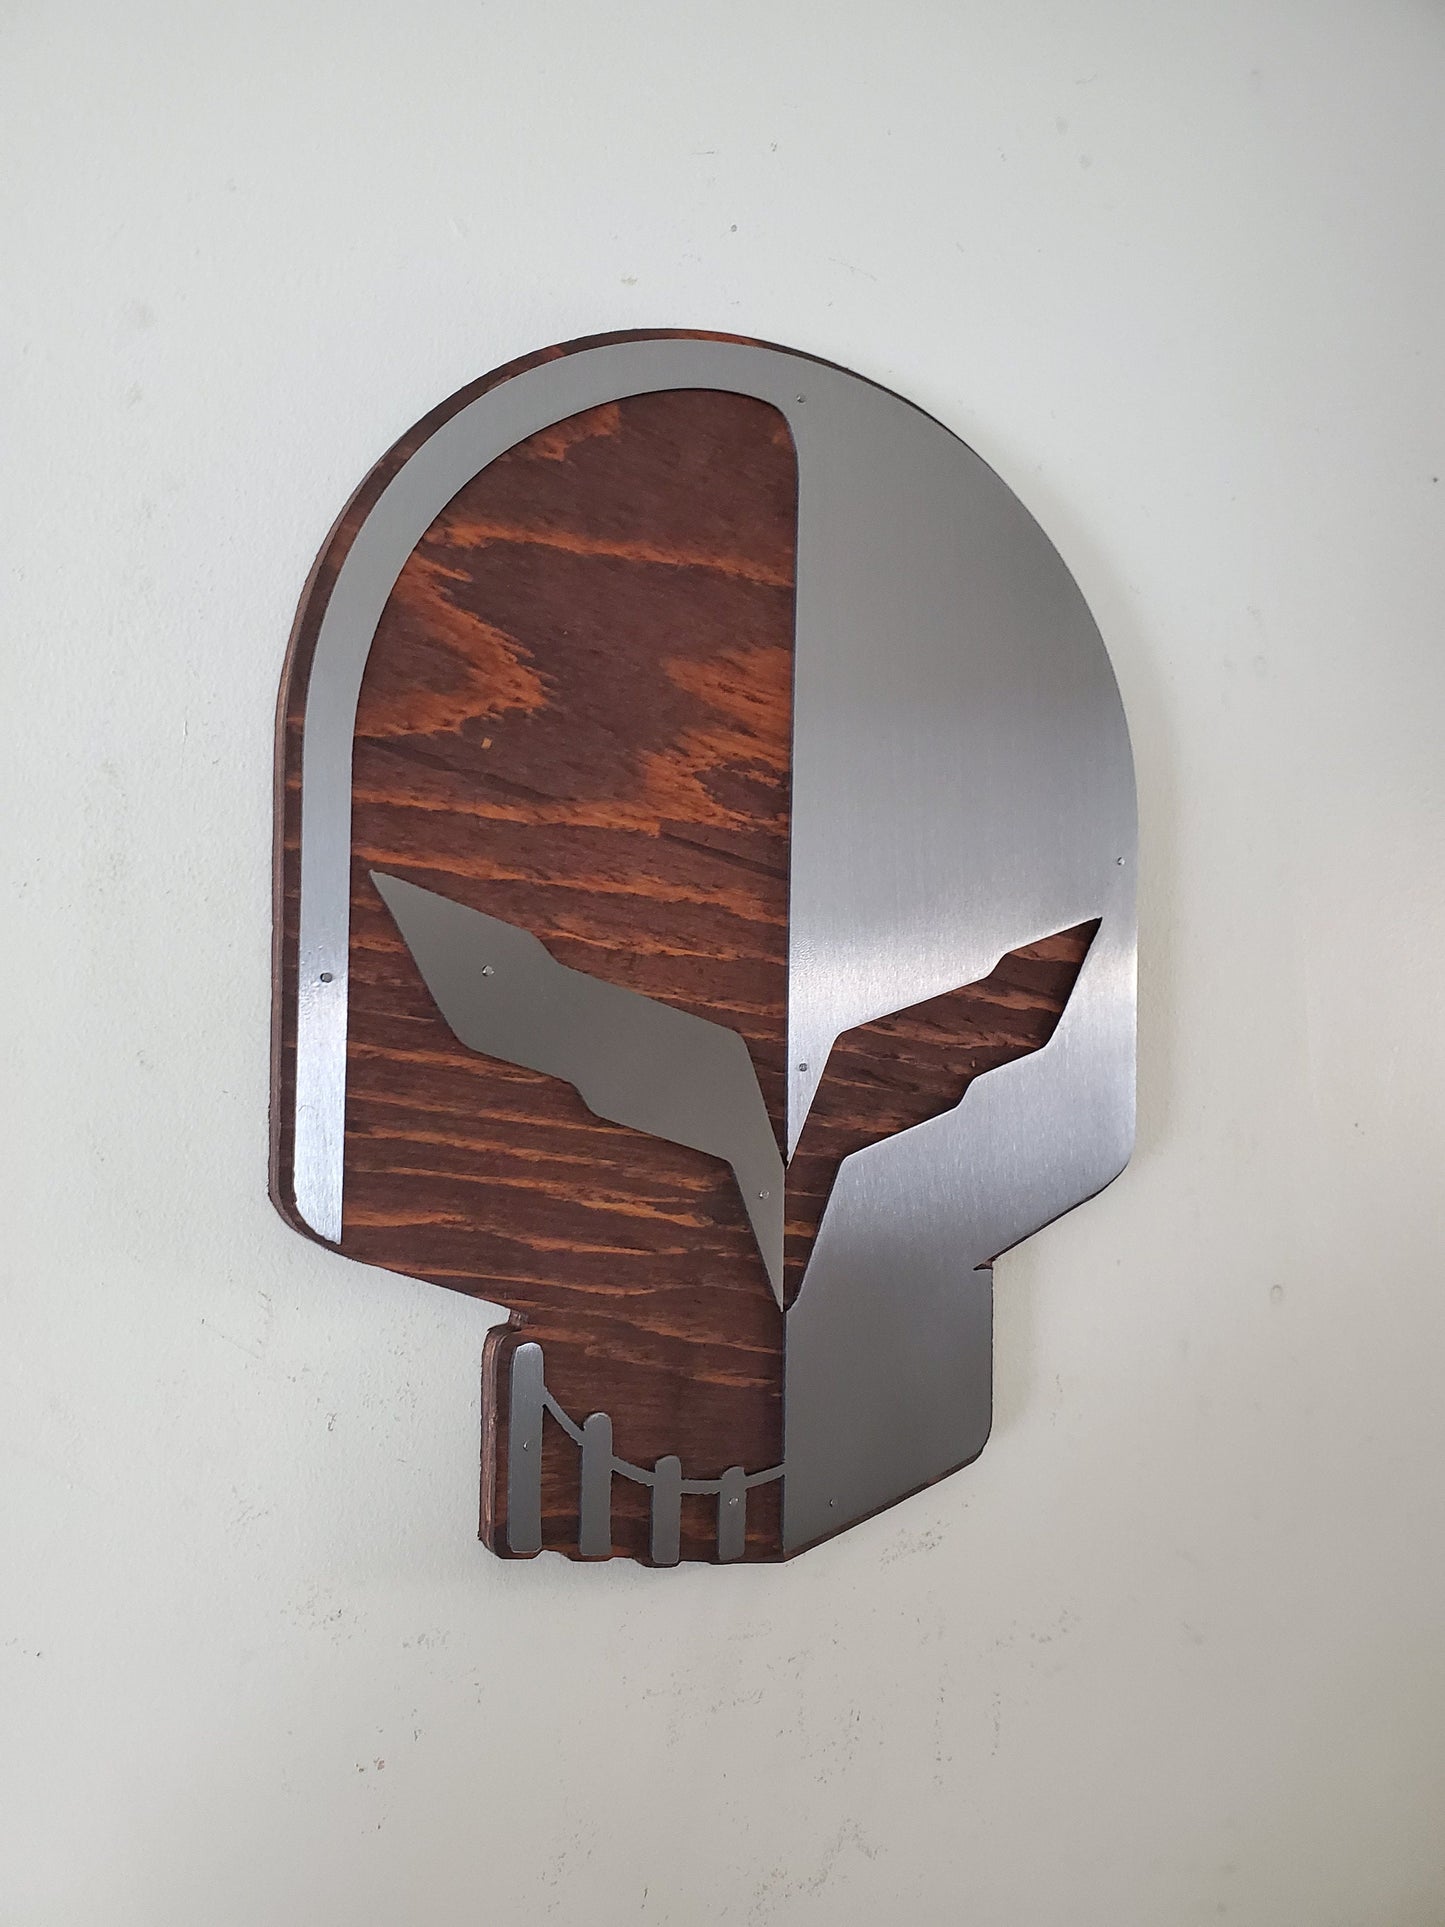 Jake Skull Metal Art on Wood | Made in USA